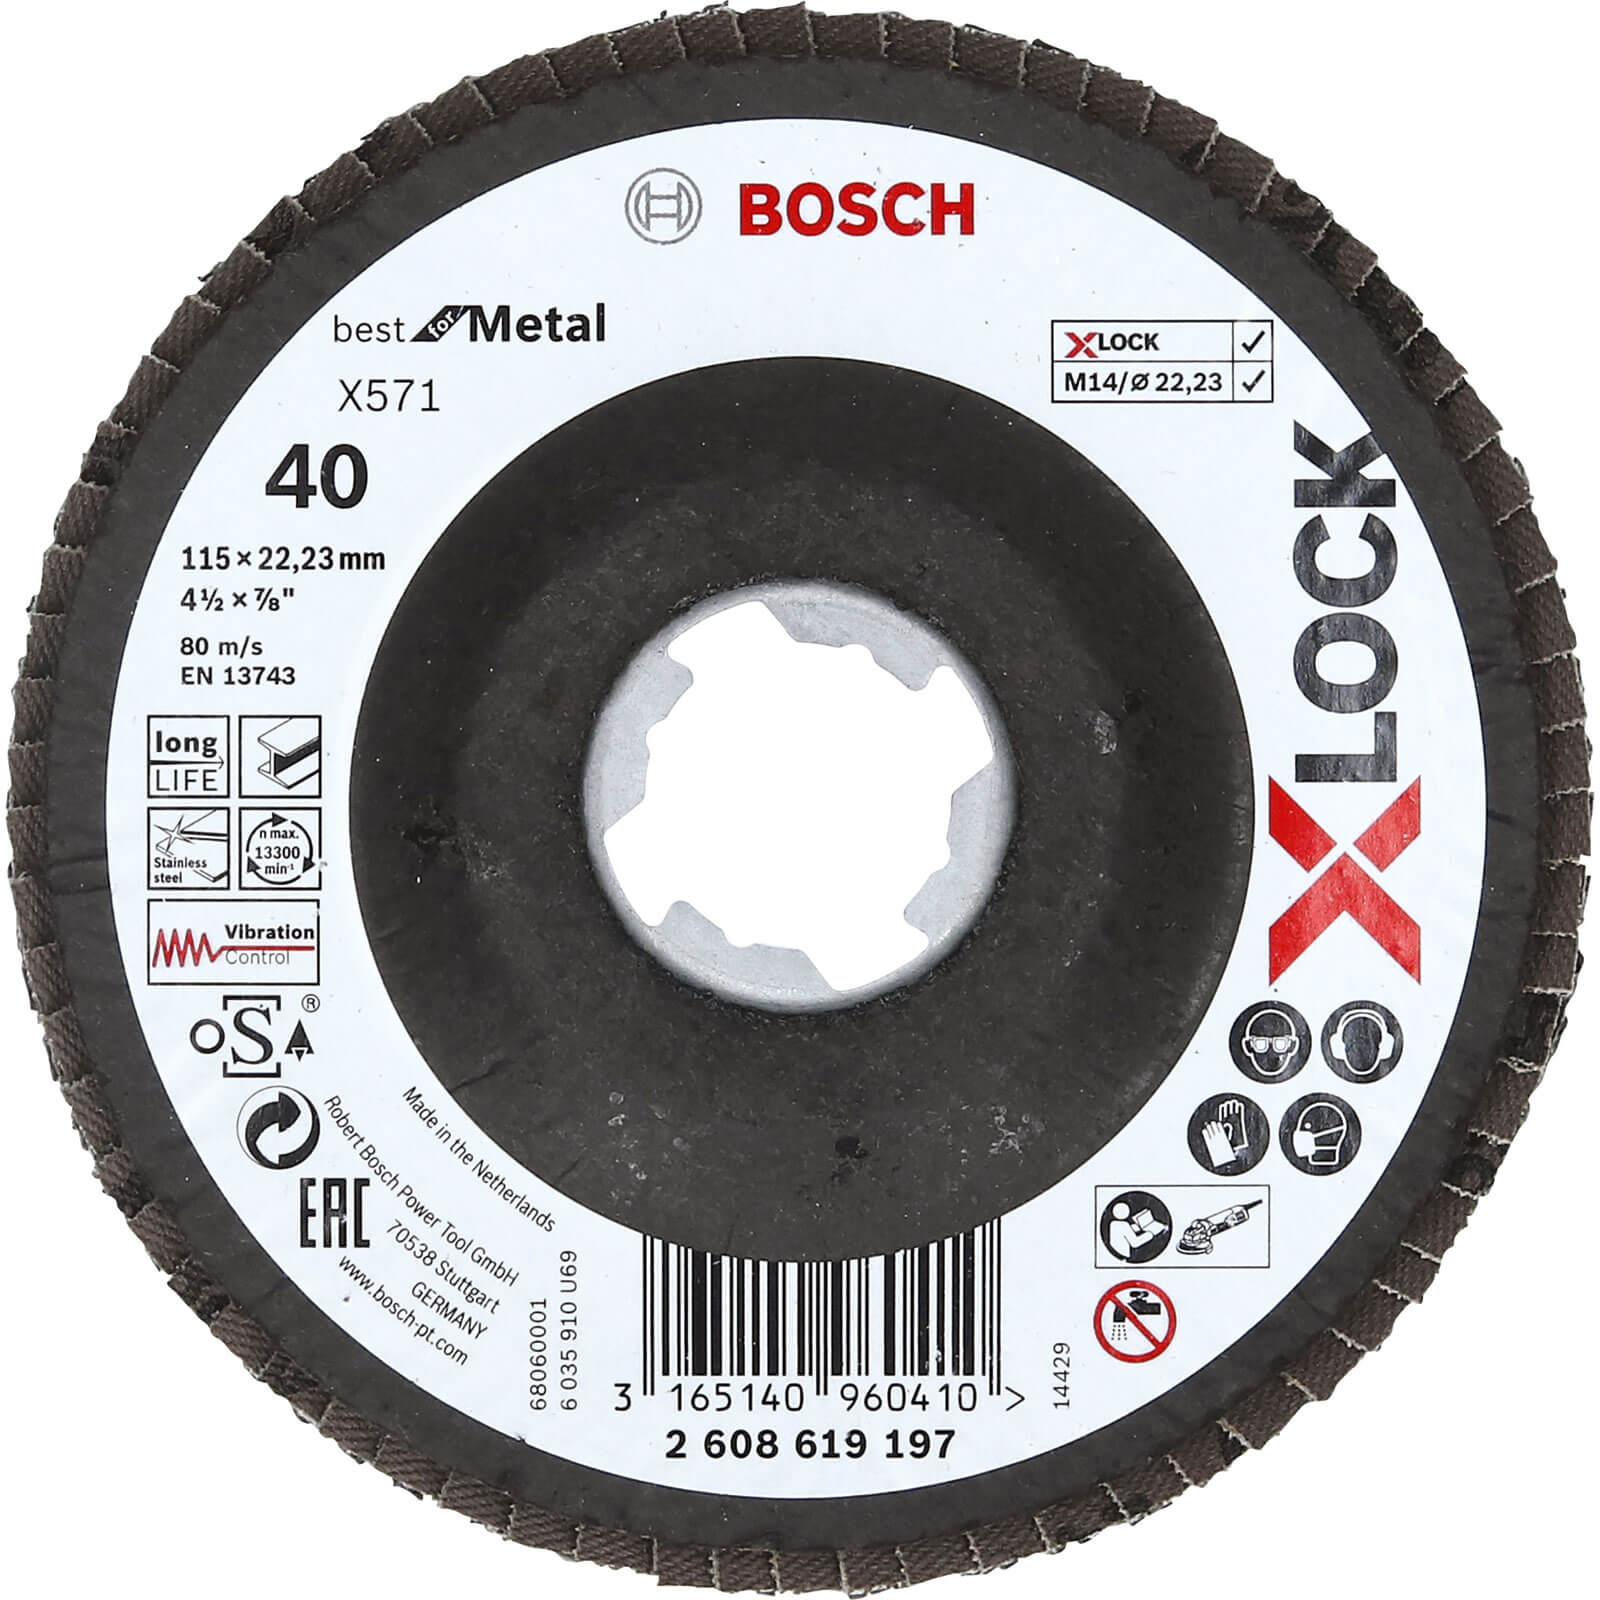 Image of Bosch X Lock Zirconium Abrasive Flap Disc 115mm 40g Pack of 1